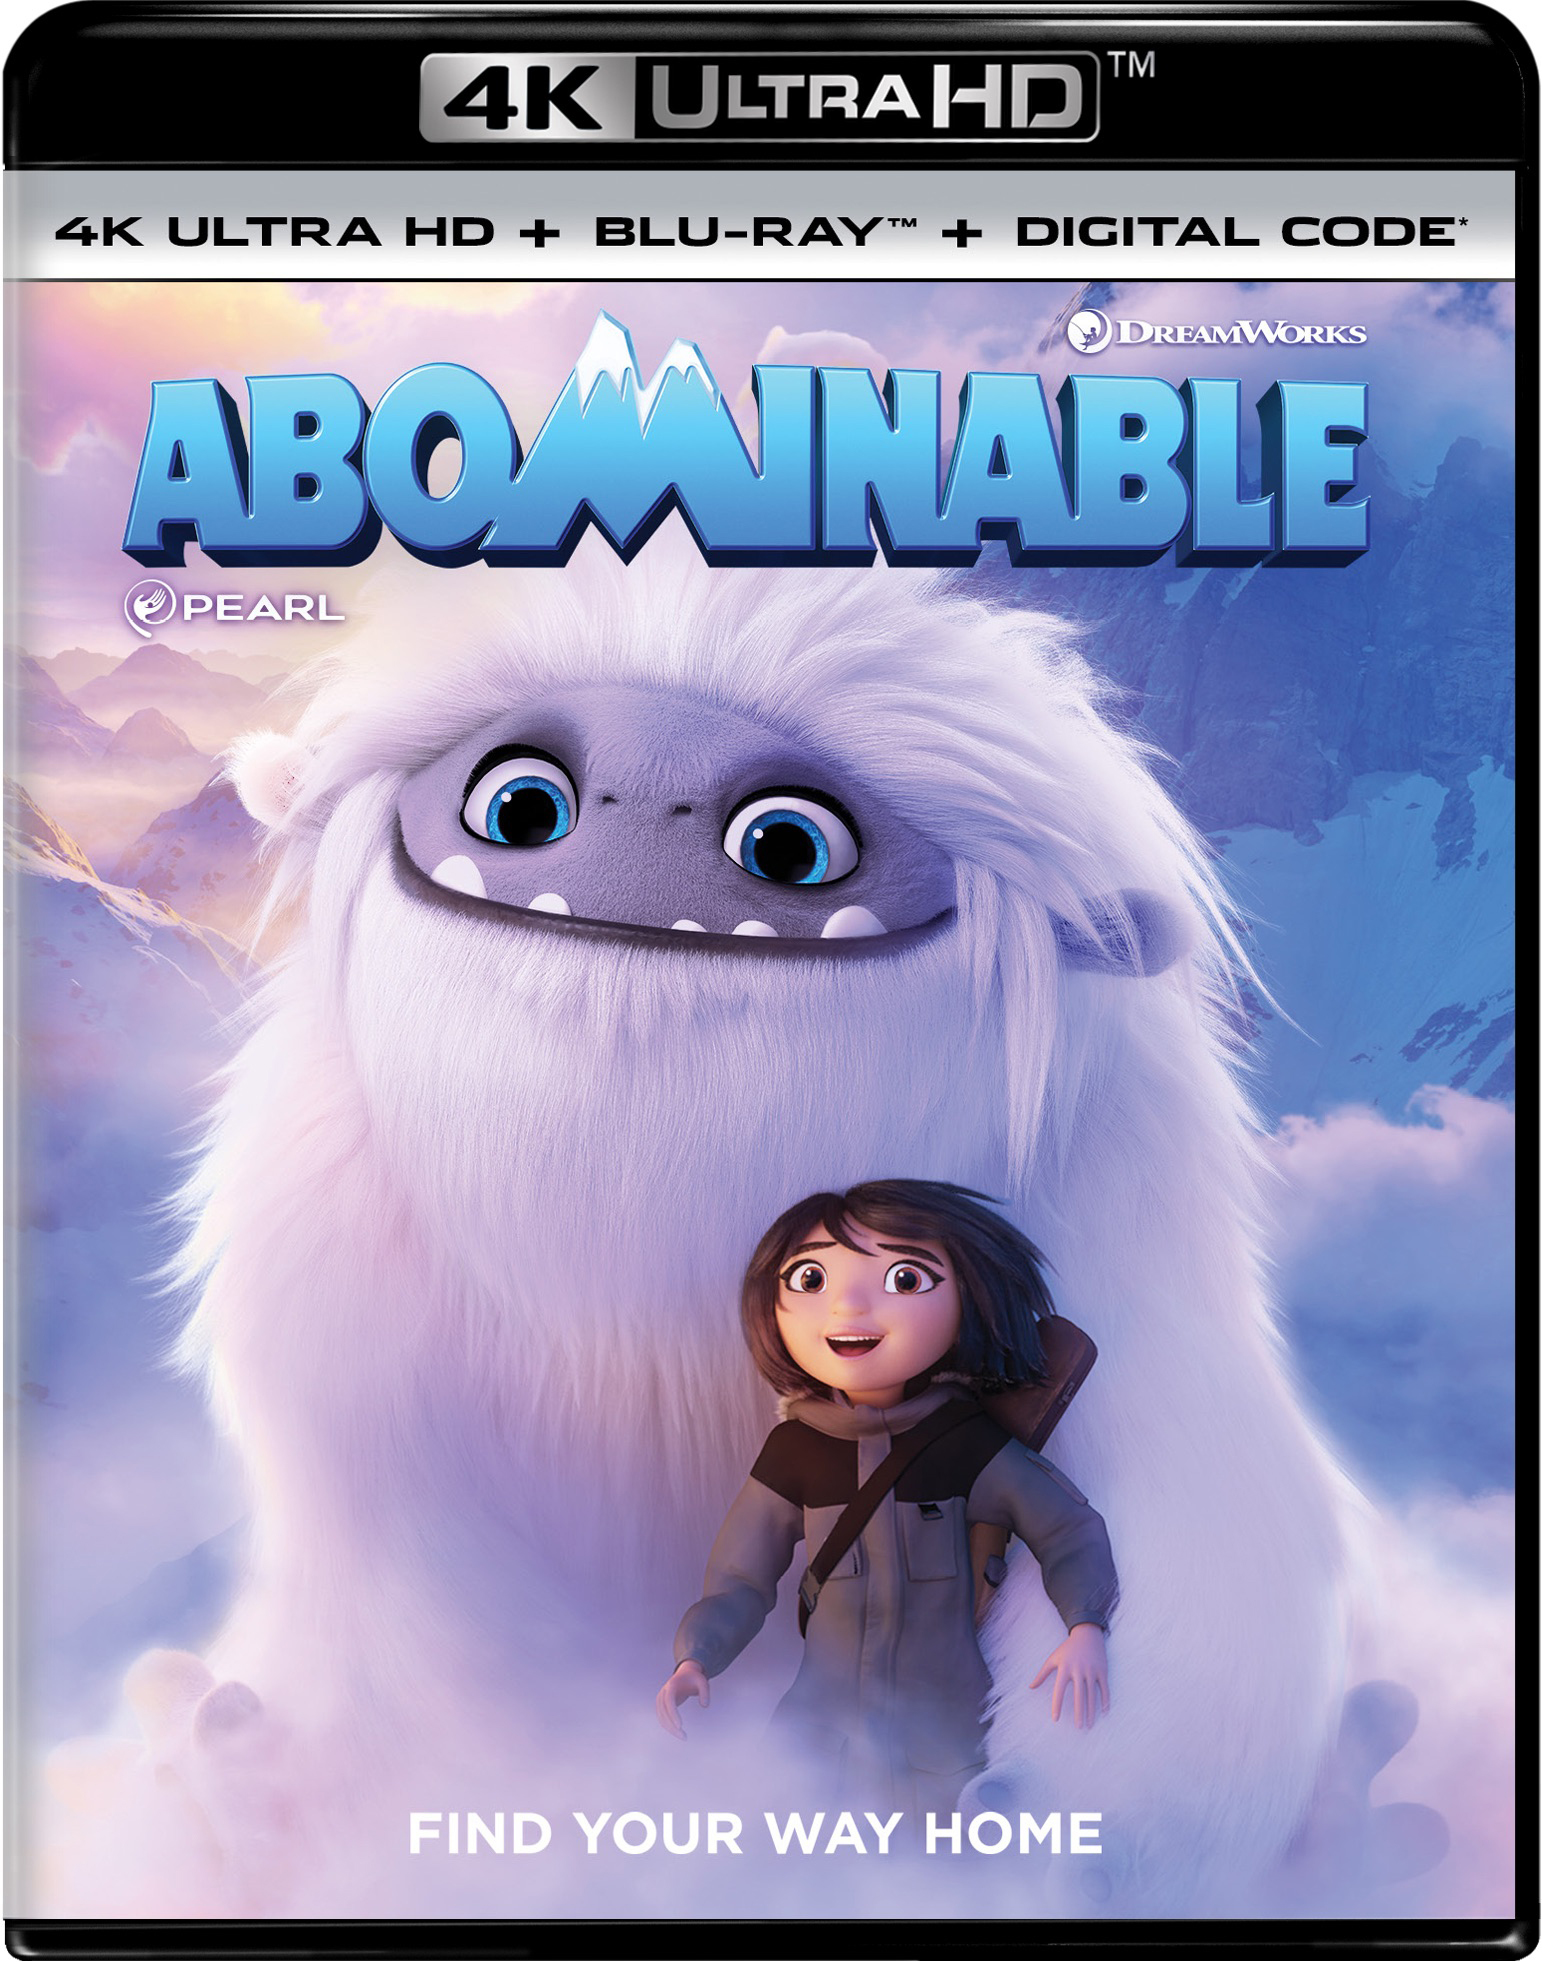 Abominable (4K Ultra HD + Blu-ray + Digital Download) - UHD [ 2019 ]  - Animation Movies On 4K Ultra HD Blu-ray - Movies On GRUV